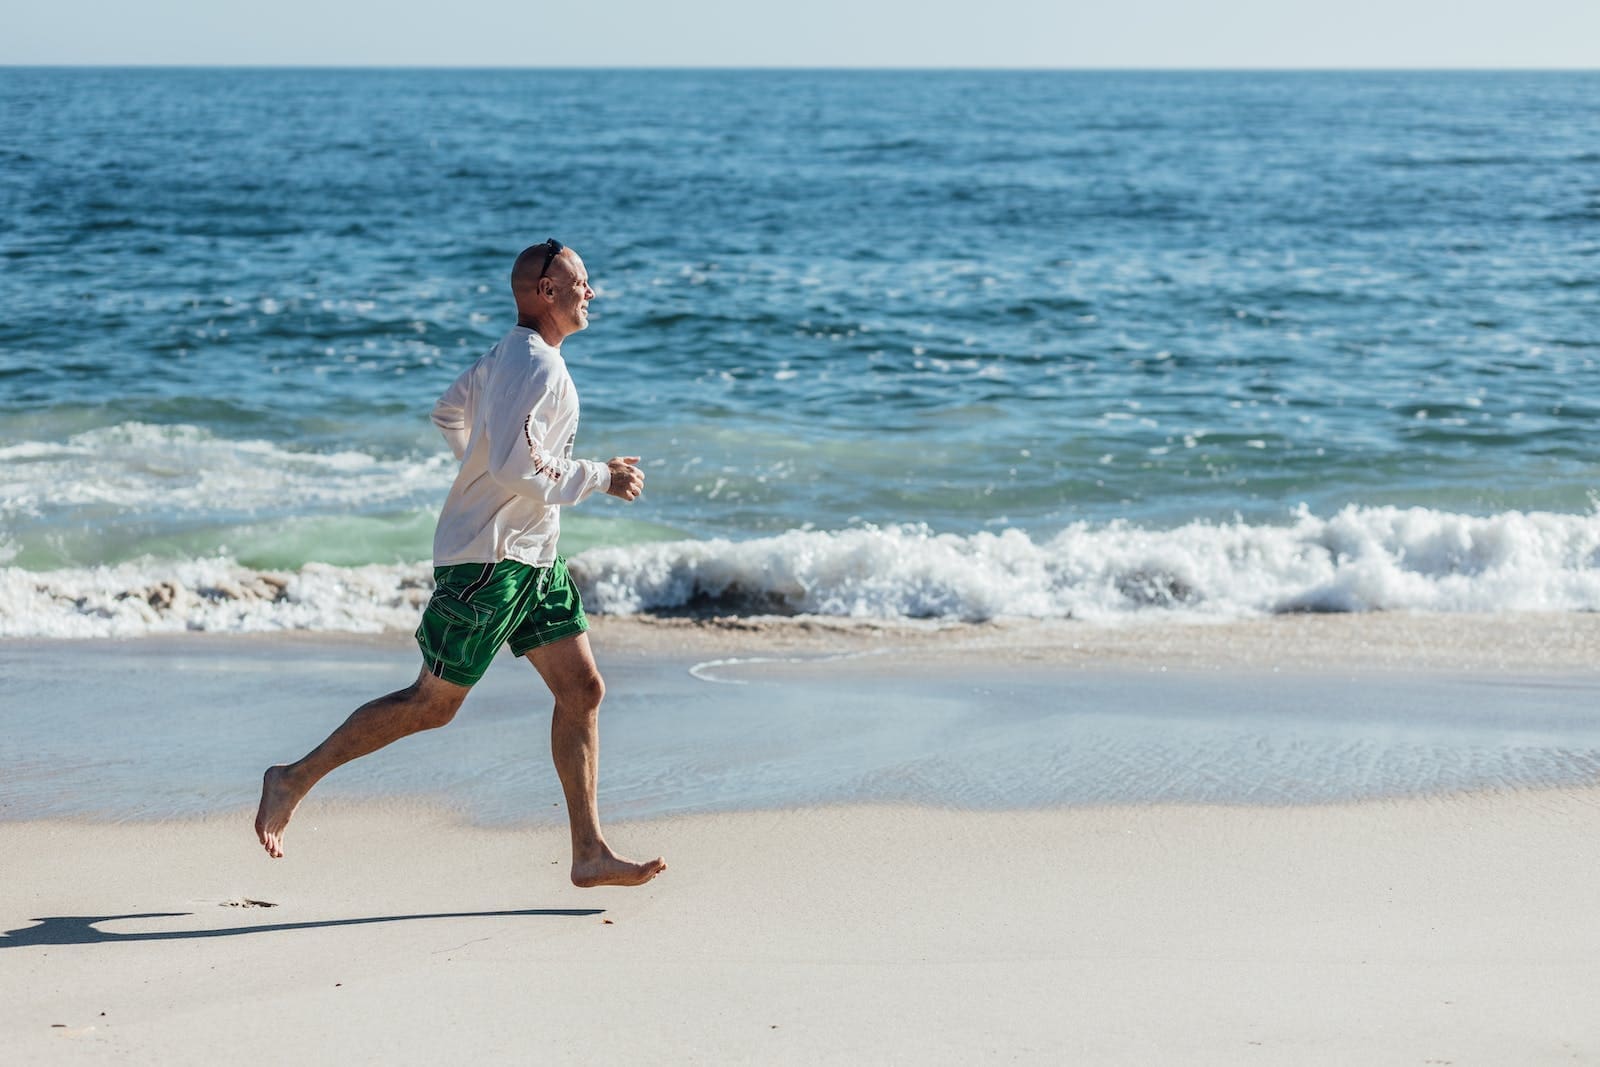 Man in White Shirt and Green Shorts Running on Beach